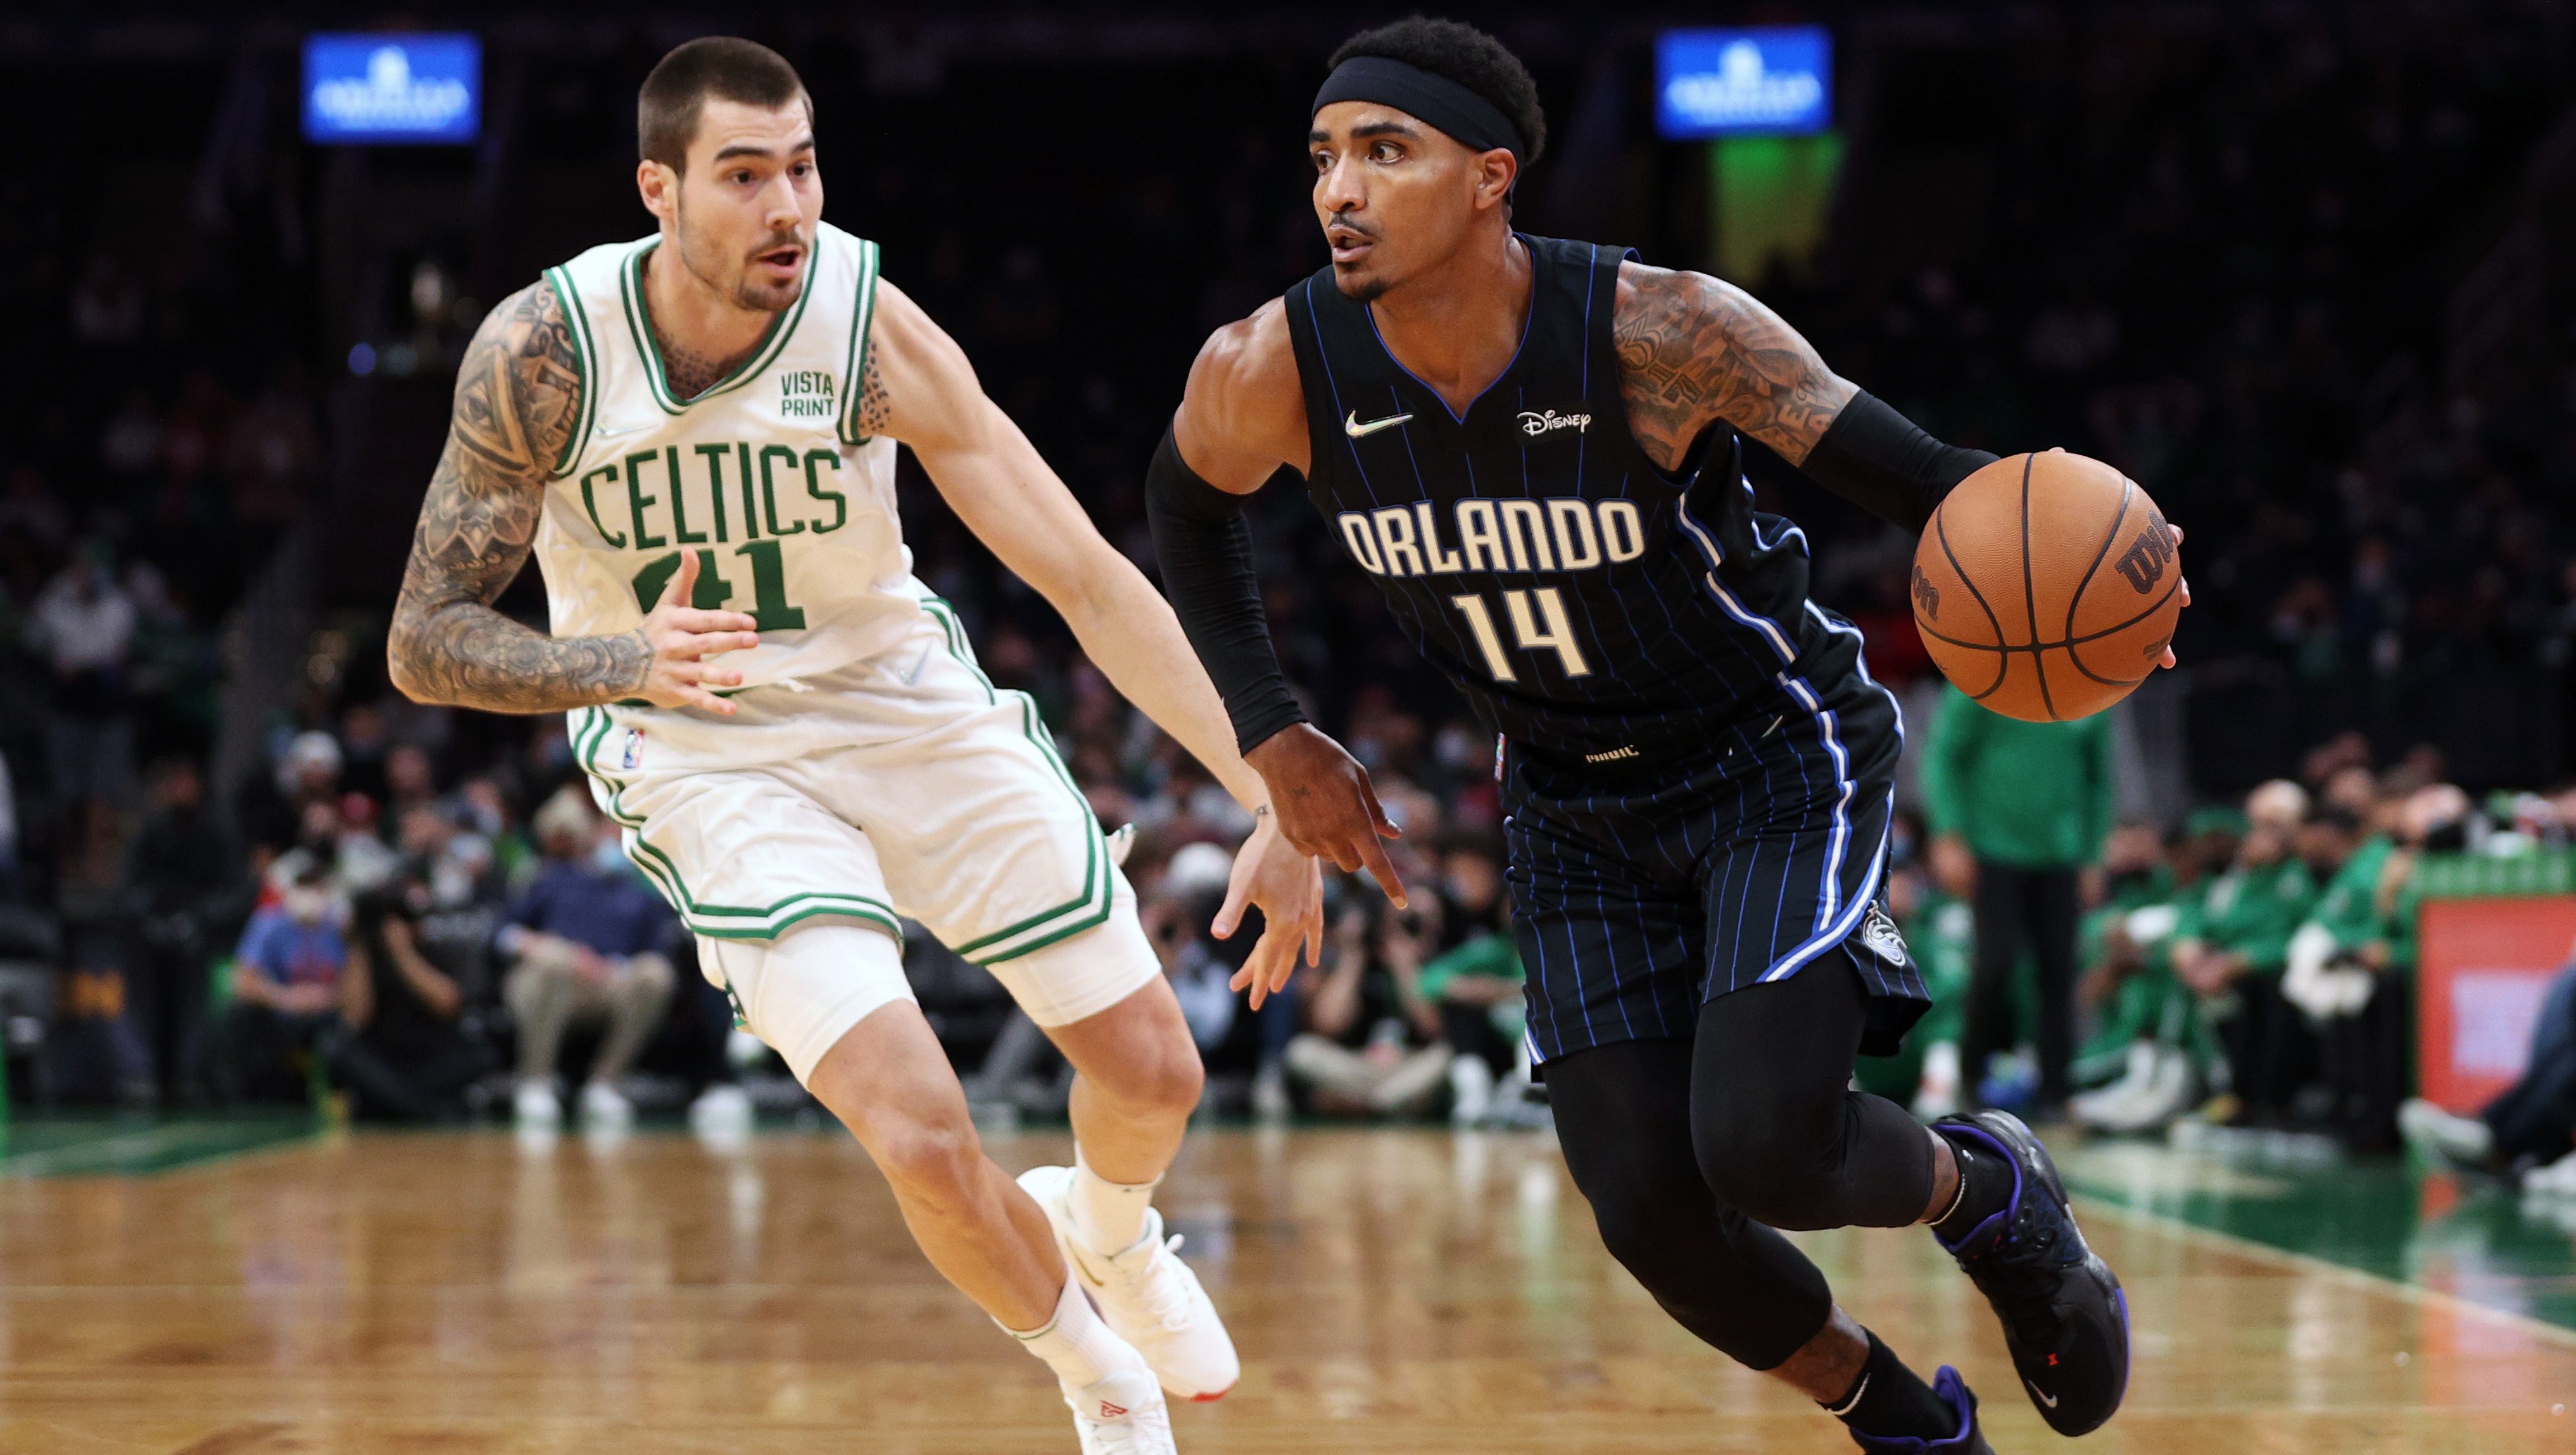 Celtics Nation on X: Juancho Hernangomez will share the screen